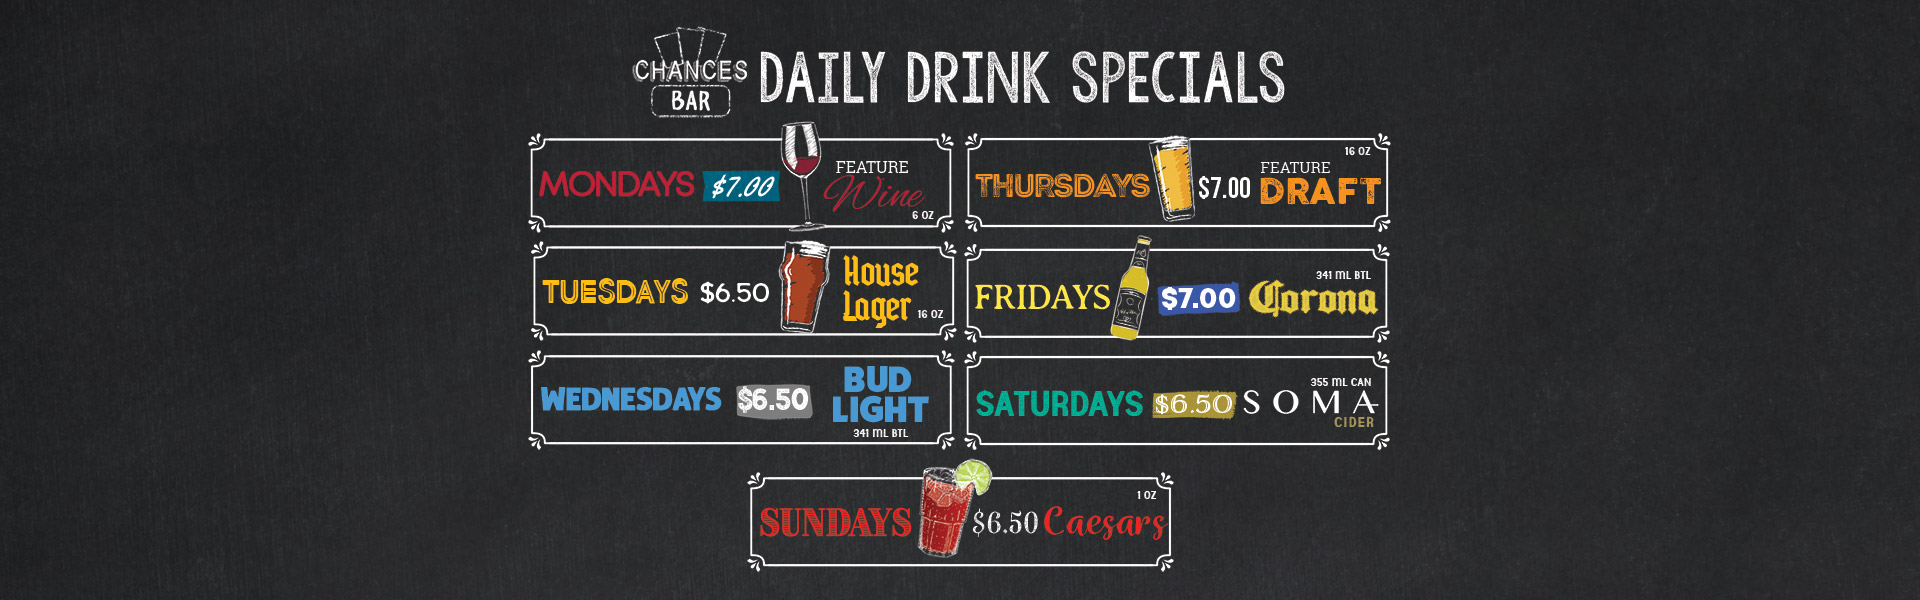 Chances Bar Daily Specials